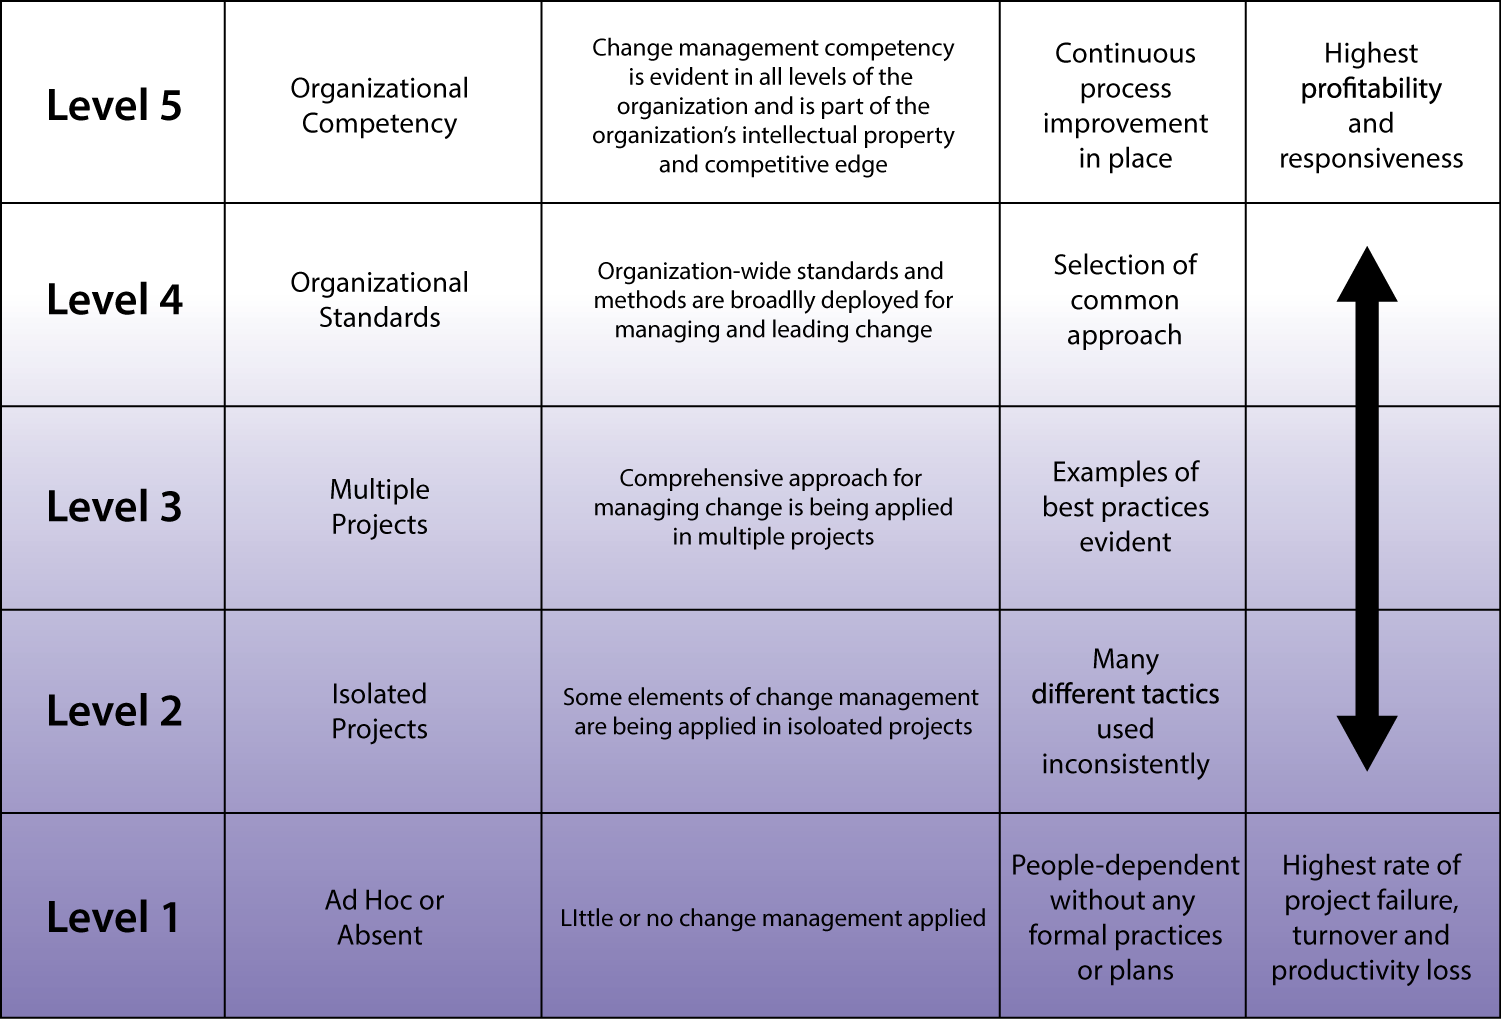 5 Levels of Change Management Maturity